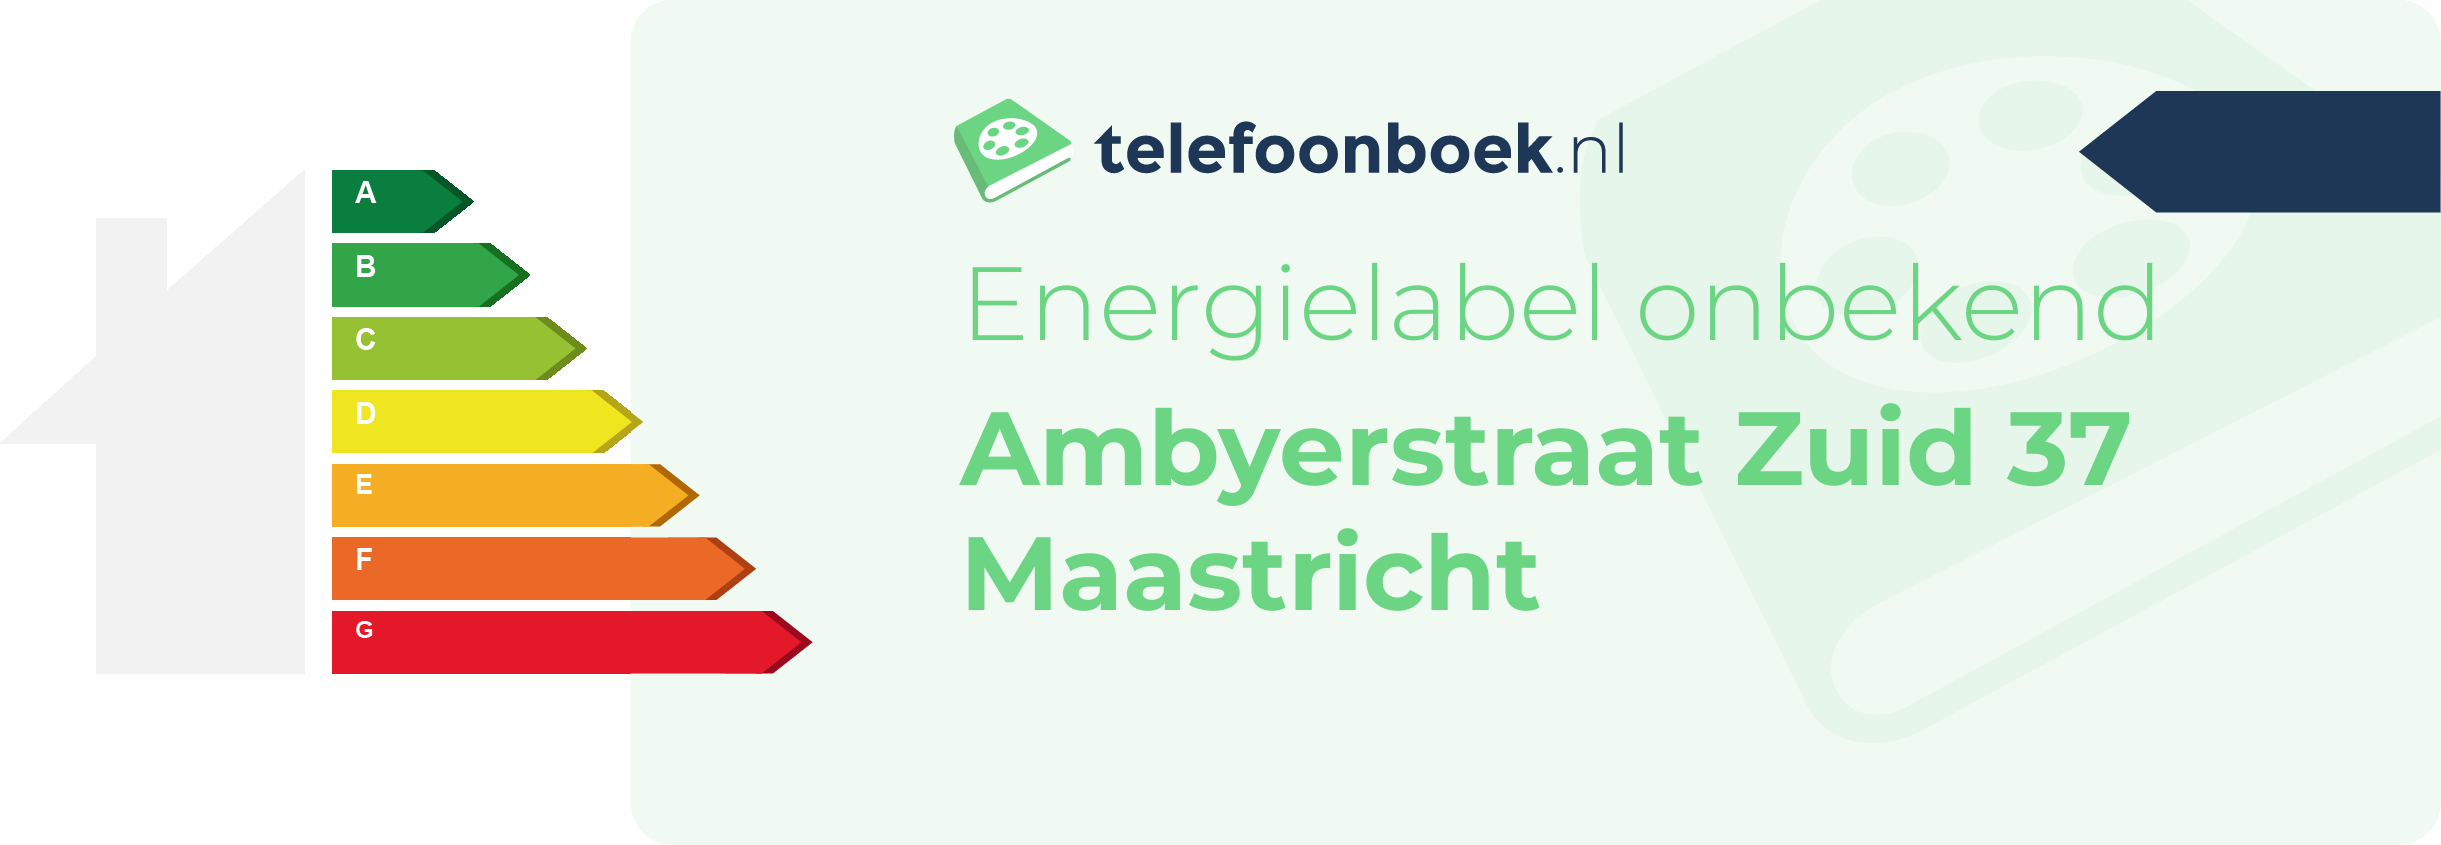 Energielabel Ambyerstraat Zuid 37 Maastricht